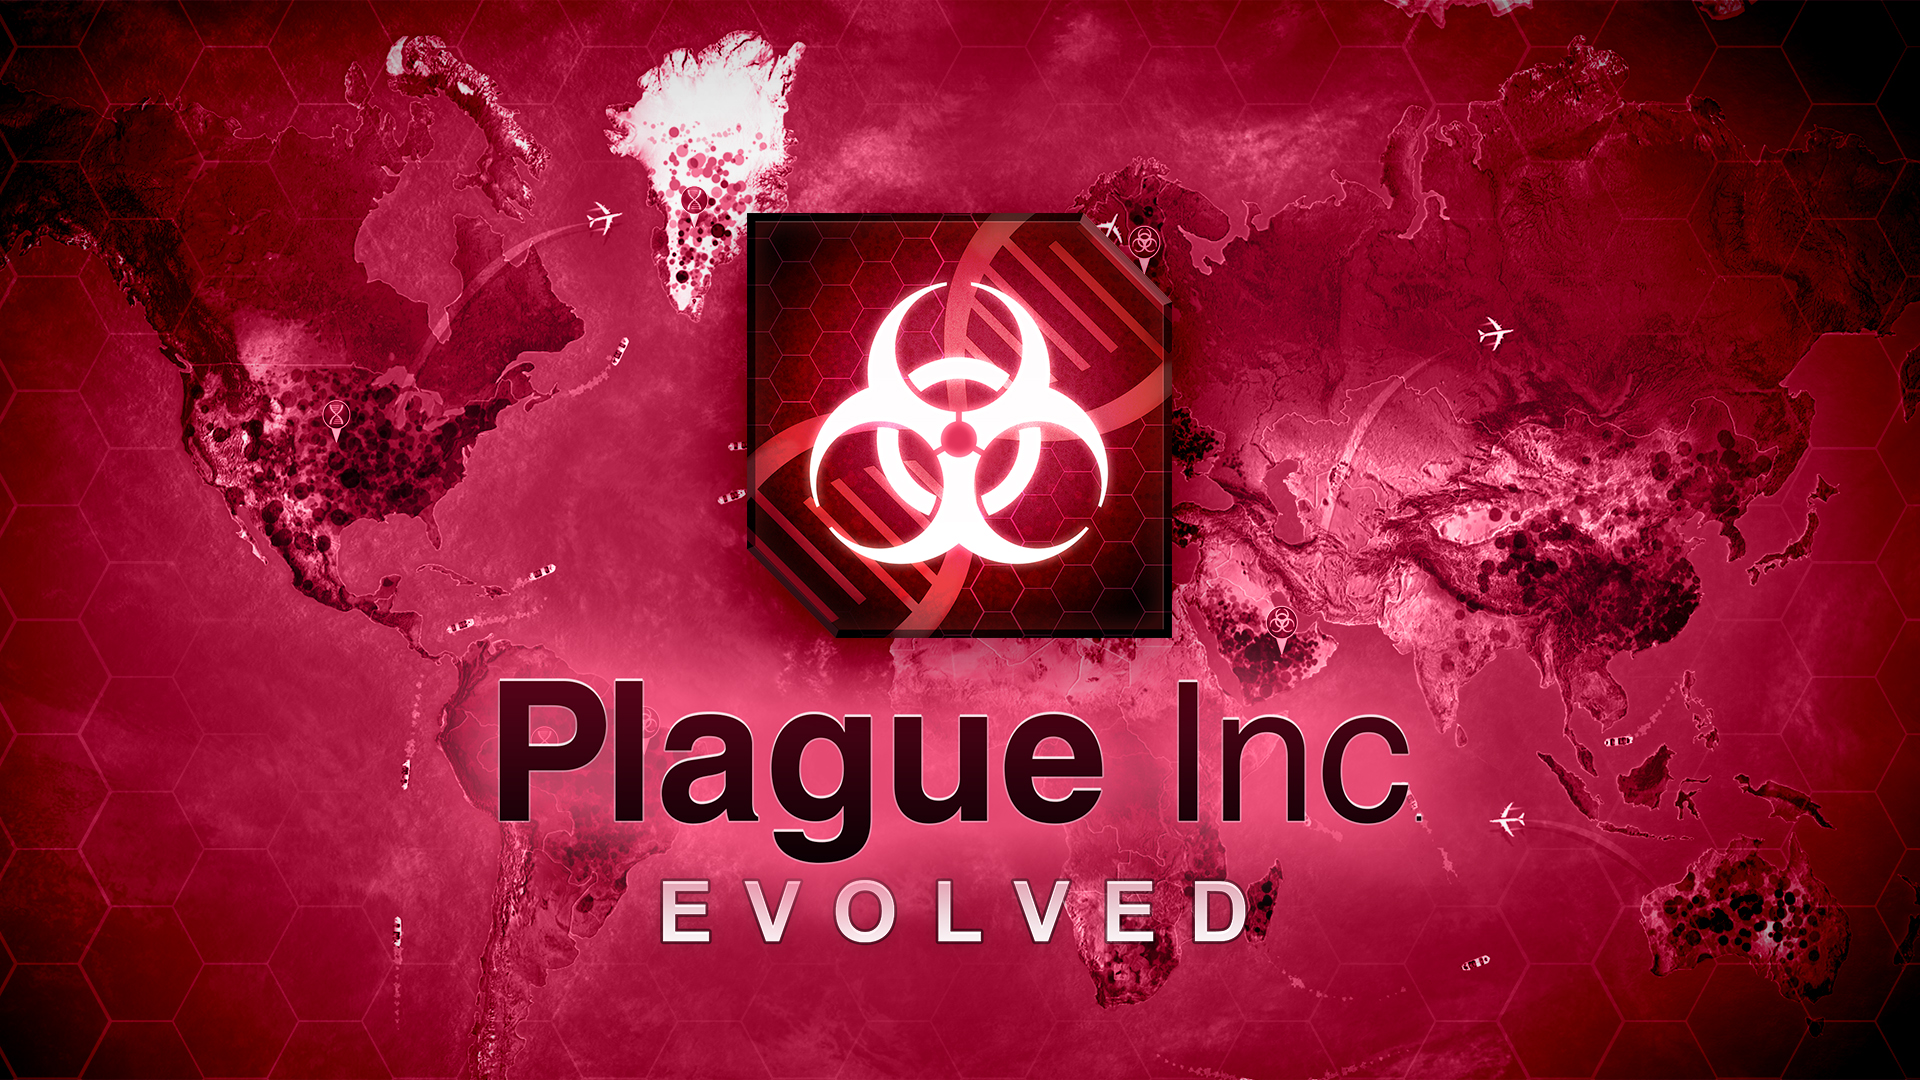 Režim The Cure ve hře Plague Inc. zdarma až do konce pandemie koronaviru